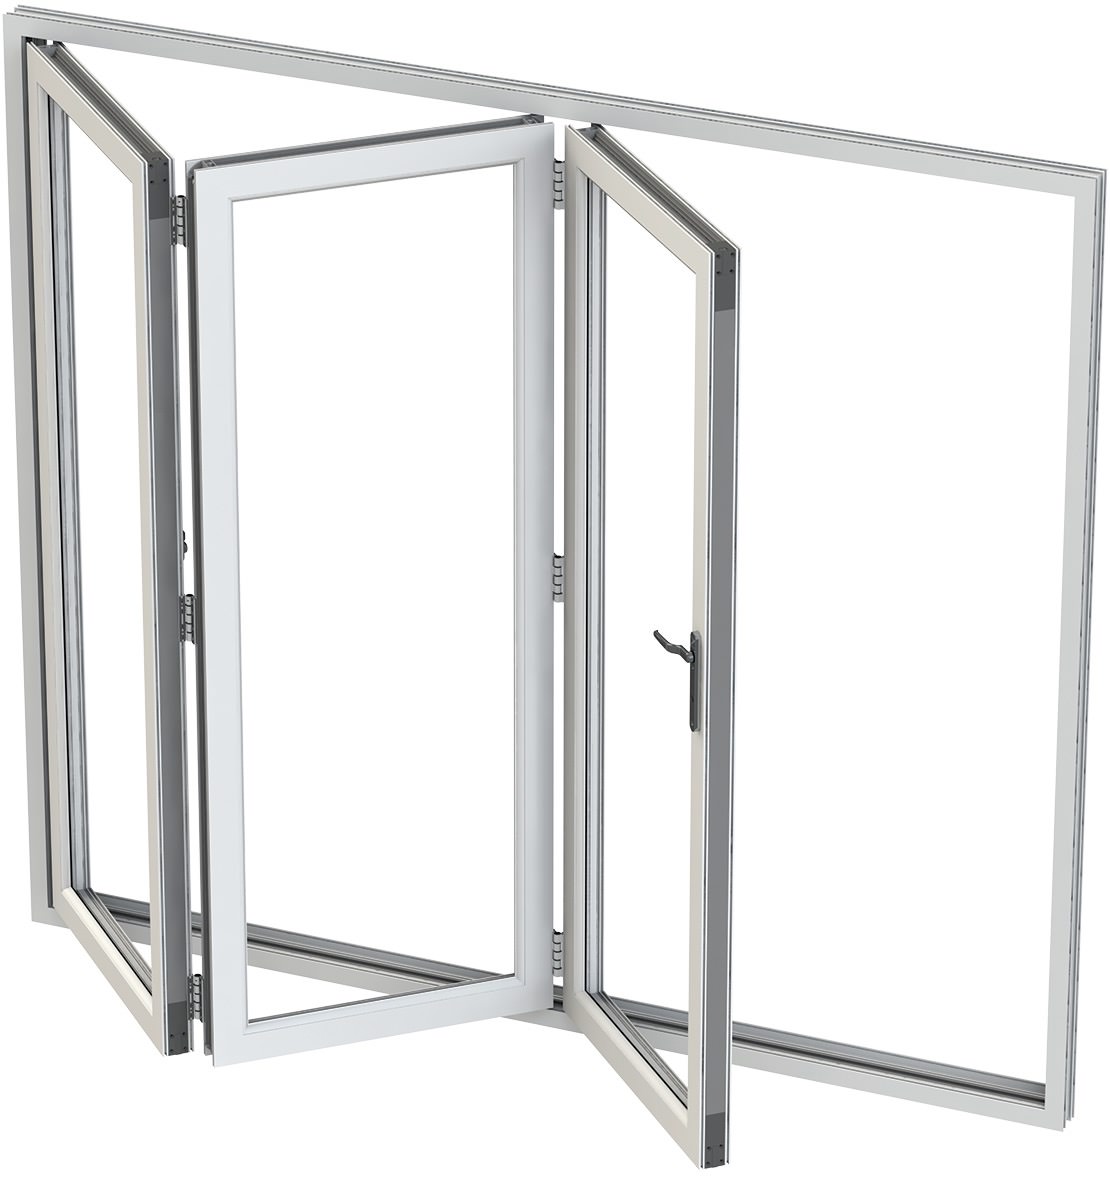 PVCu Bi-Folding Doors